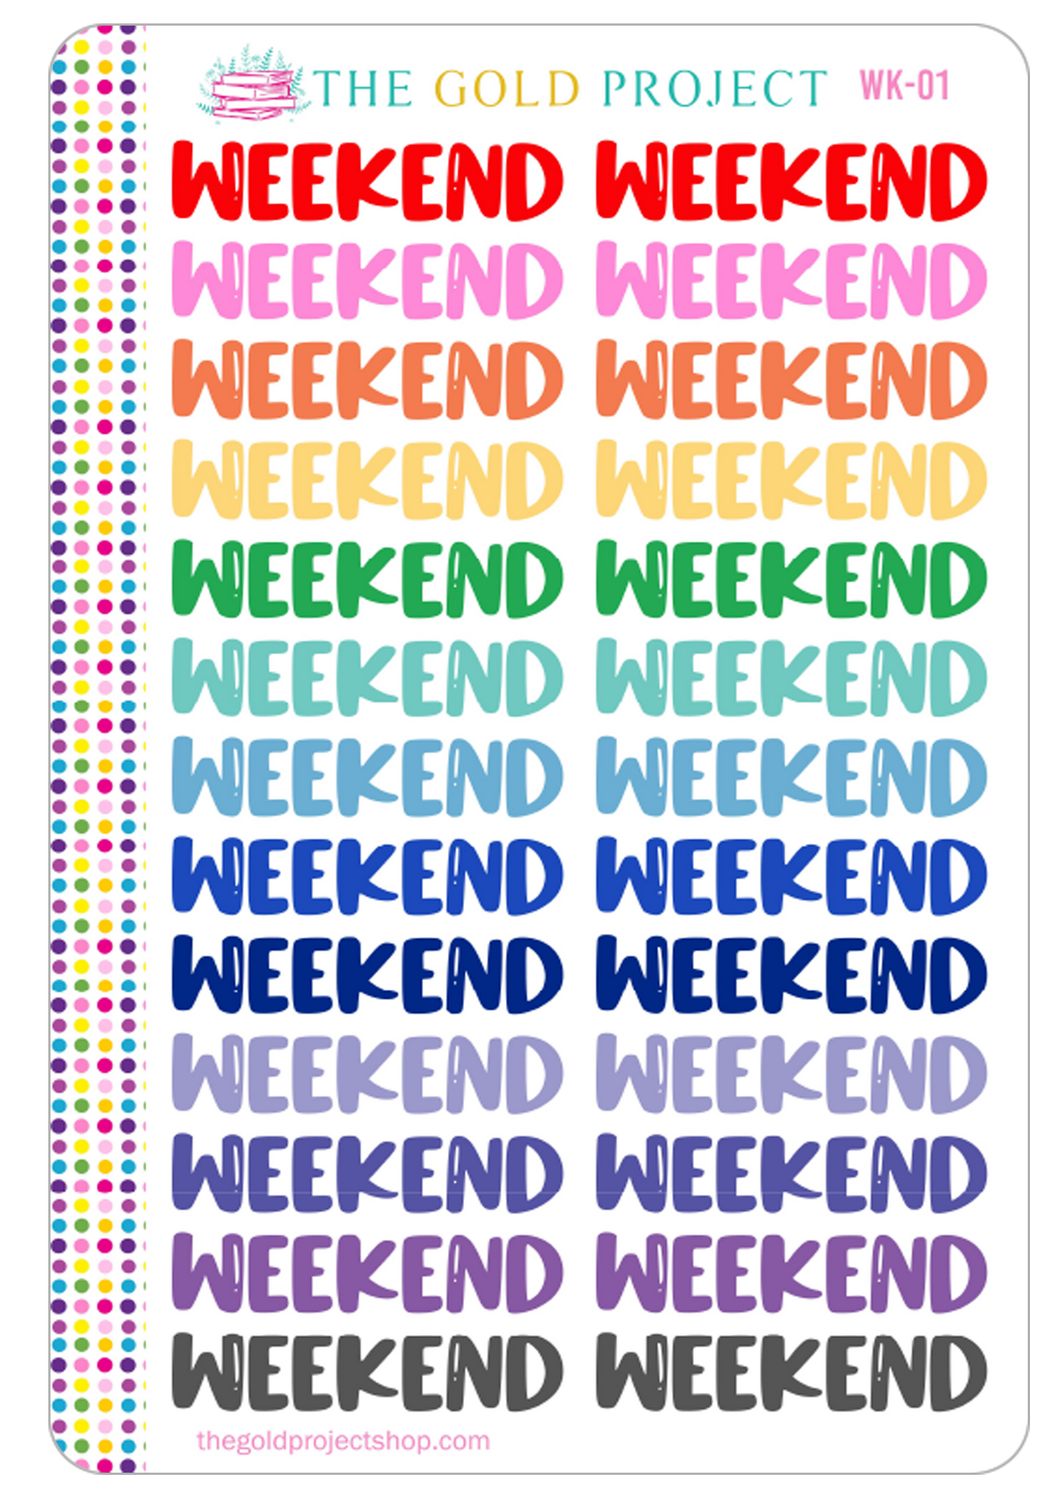 WK-01 Weekend Banners